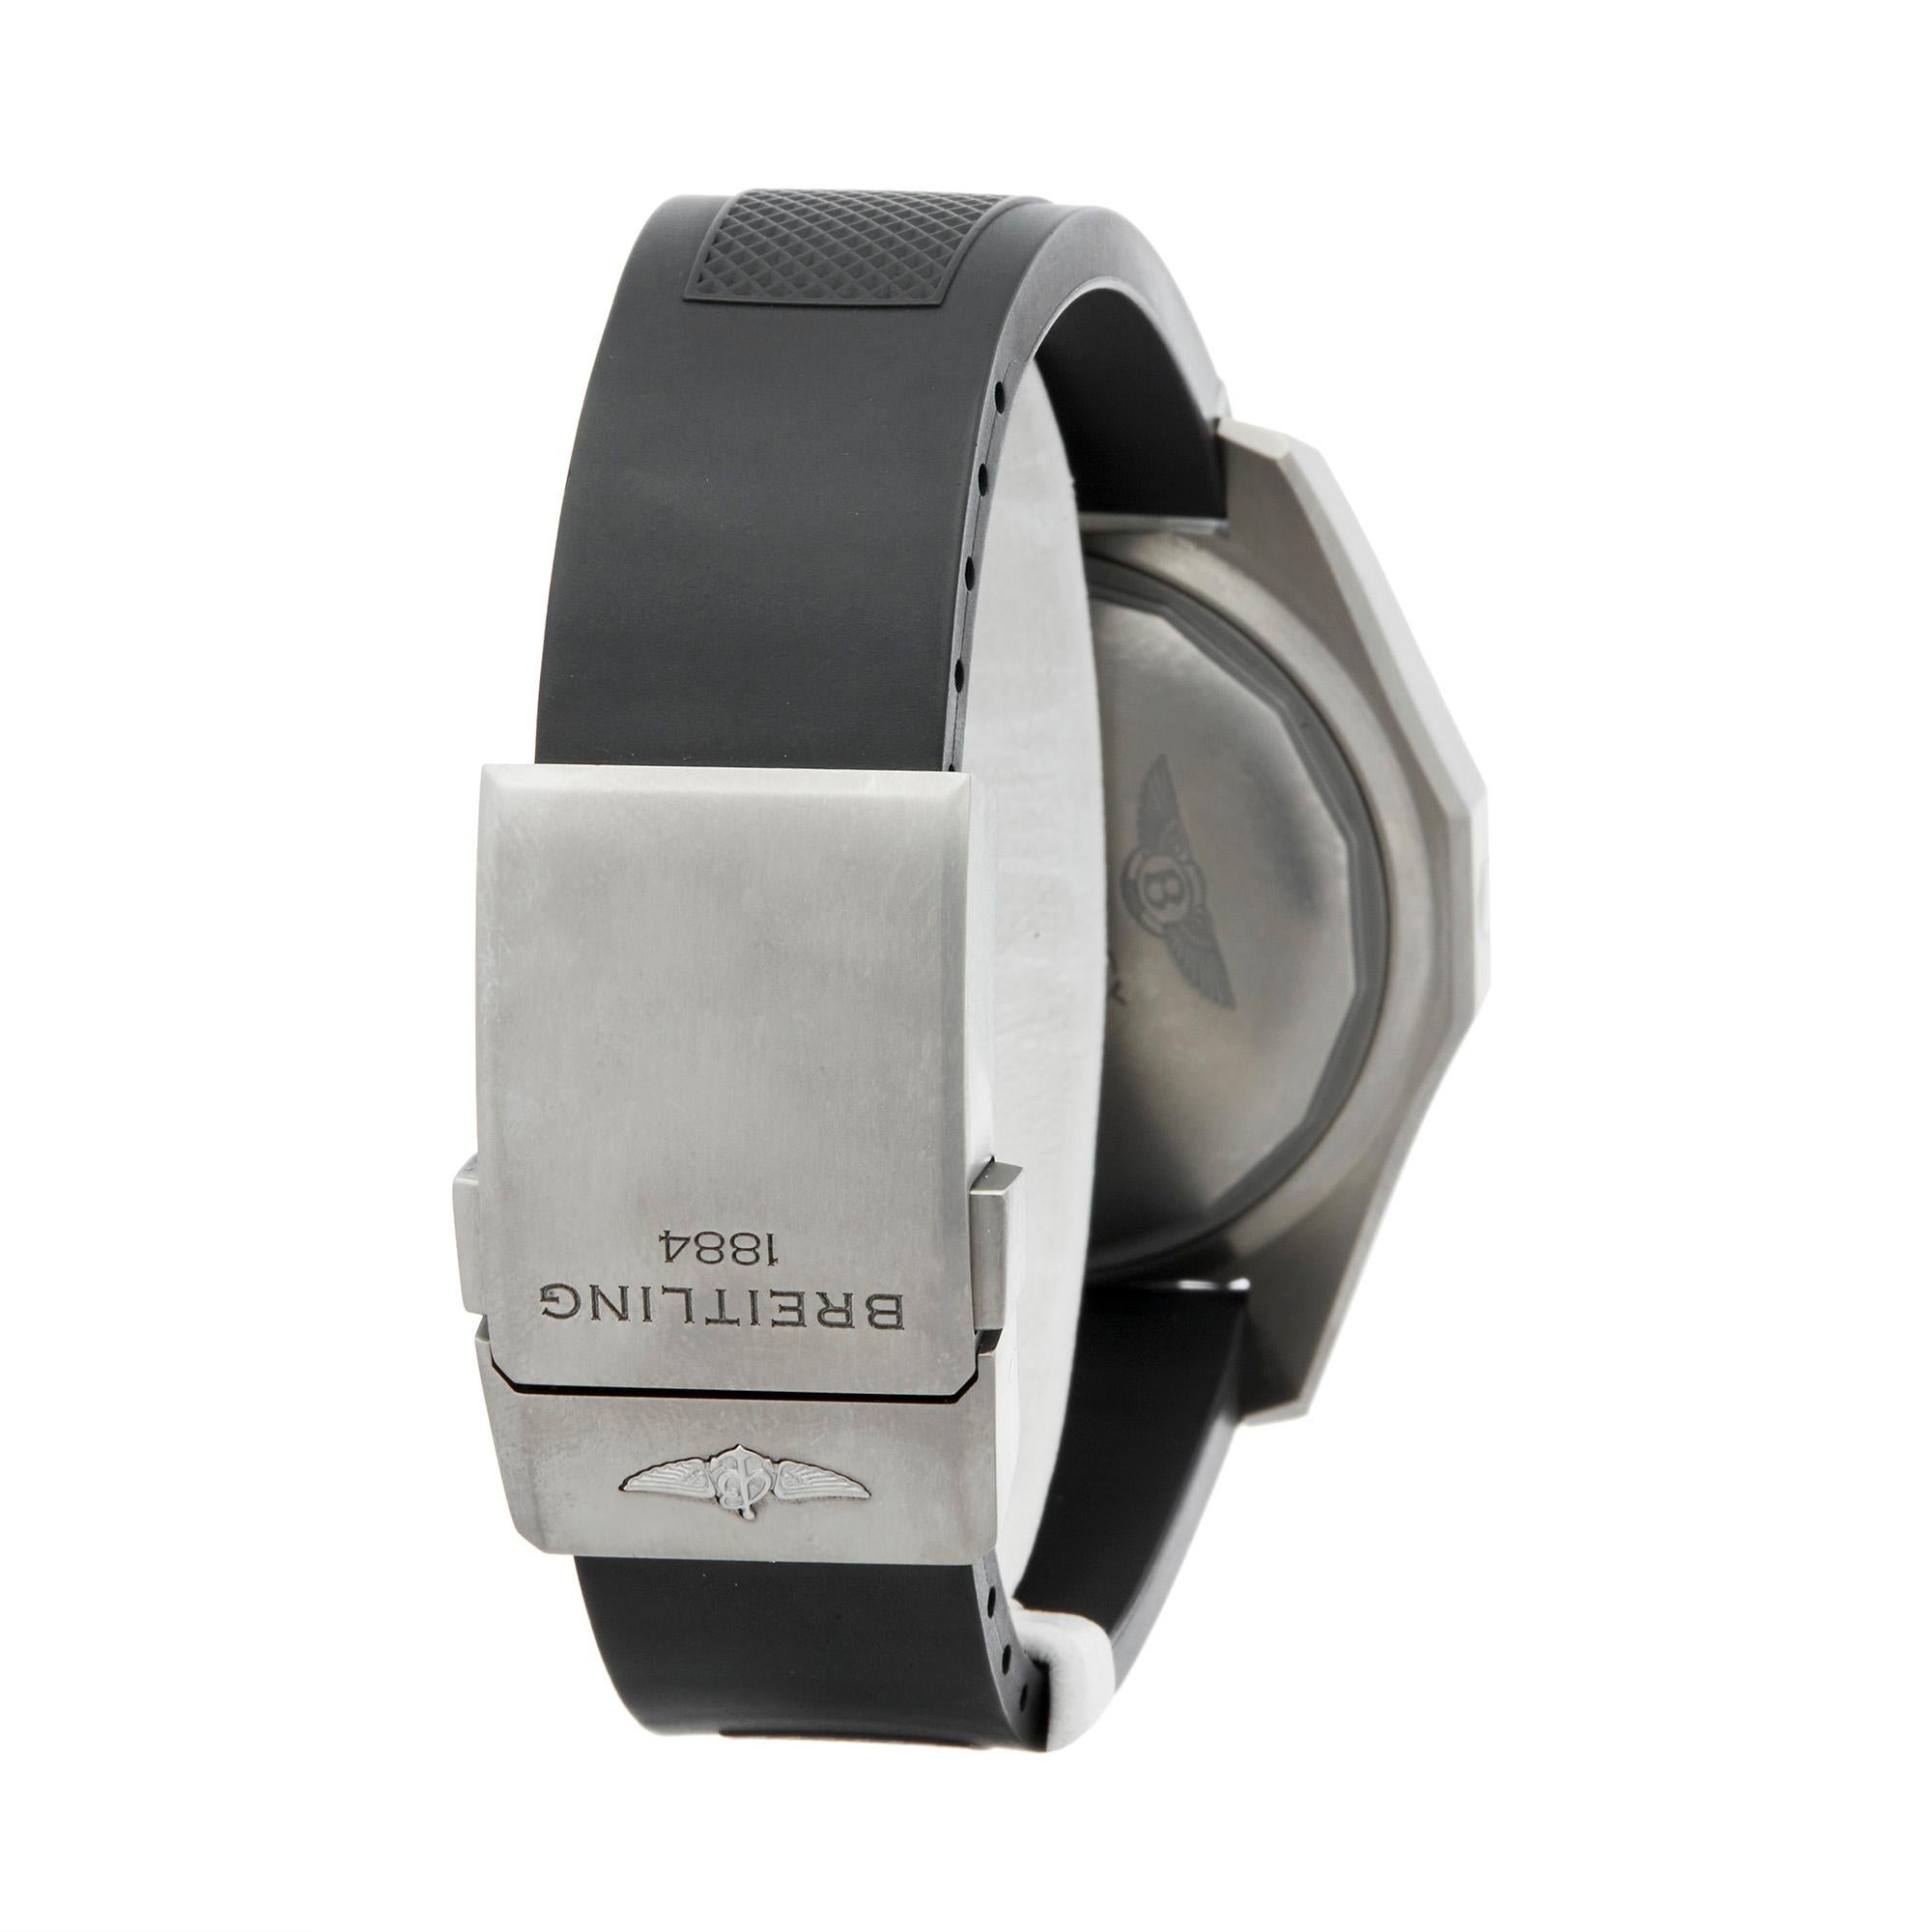 Breitling Supersports Titanium E2736522 Wristwatch 1